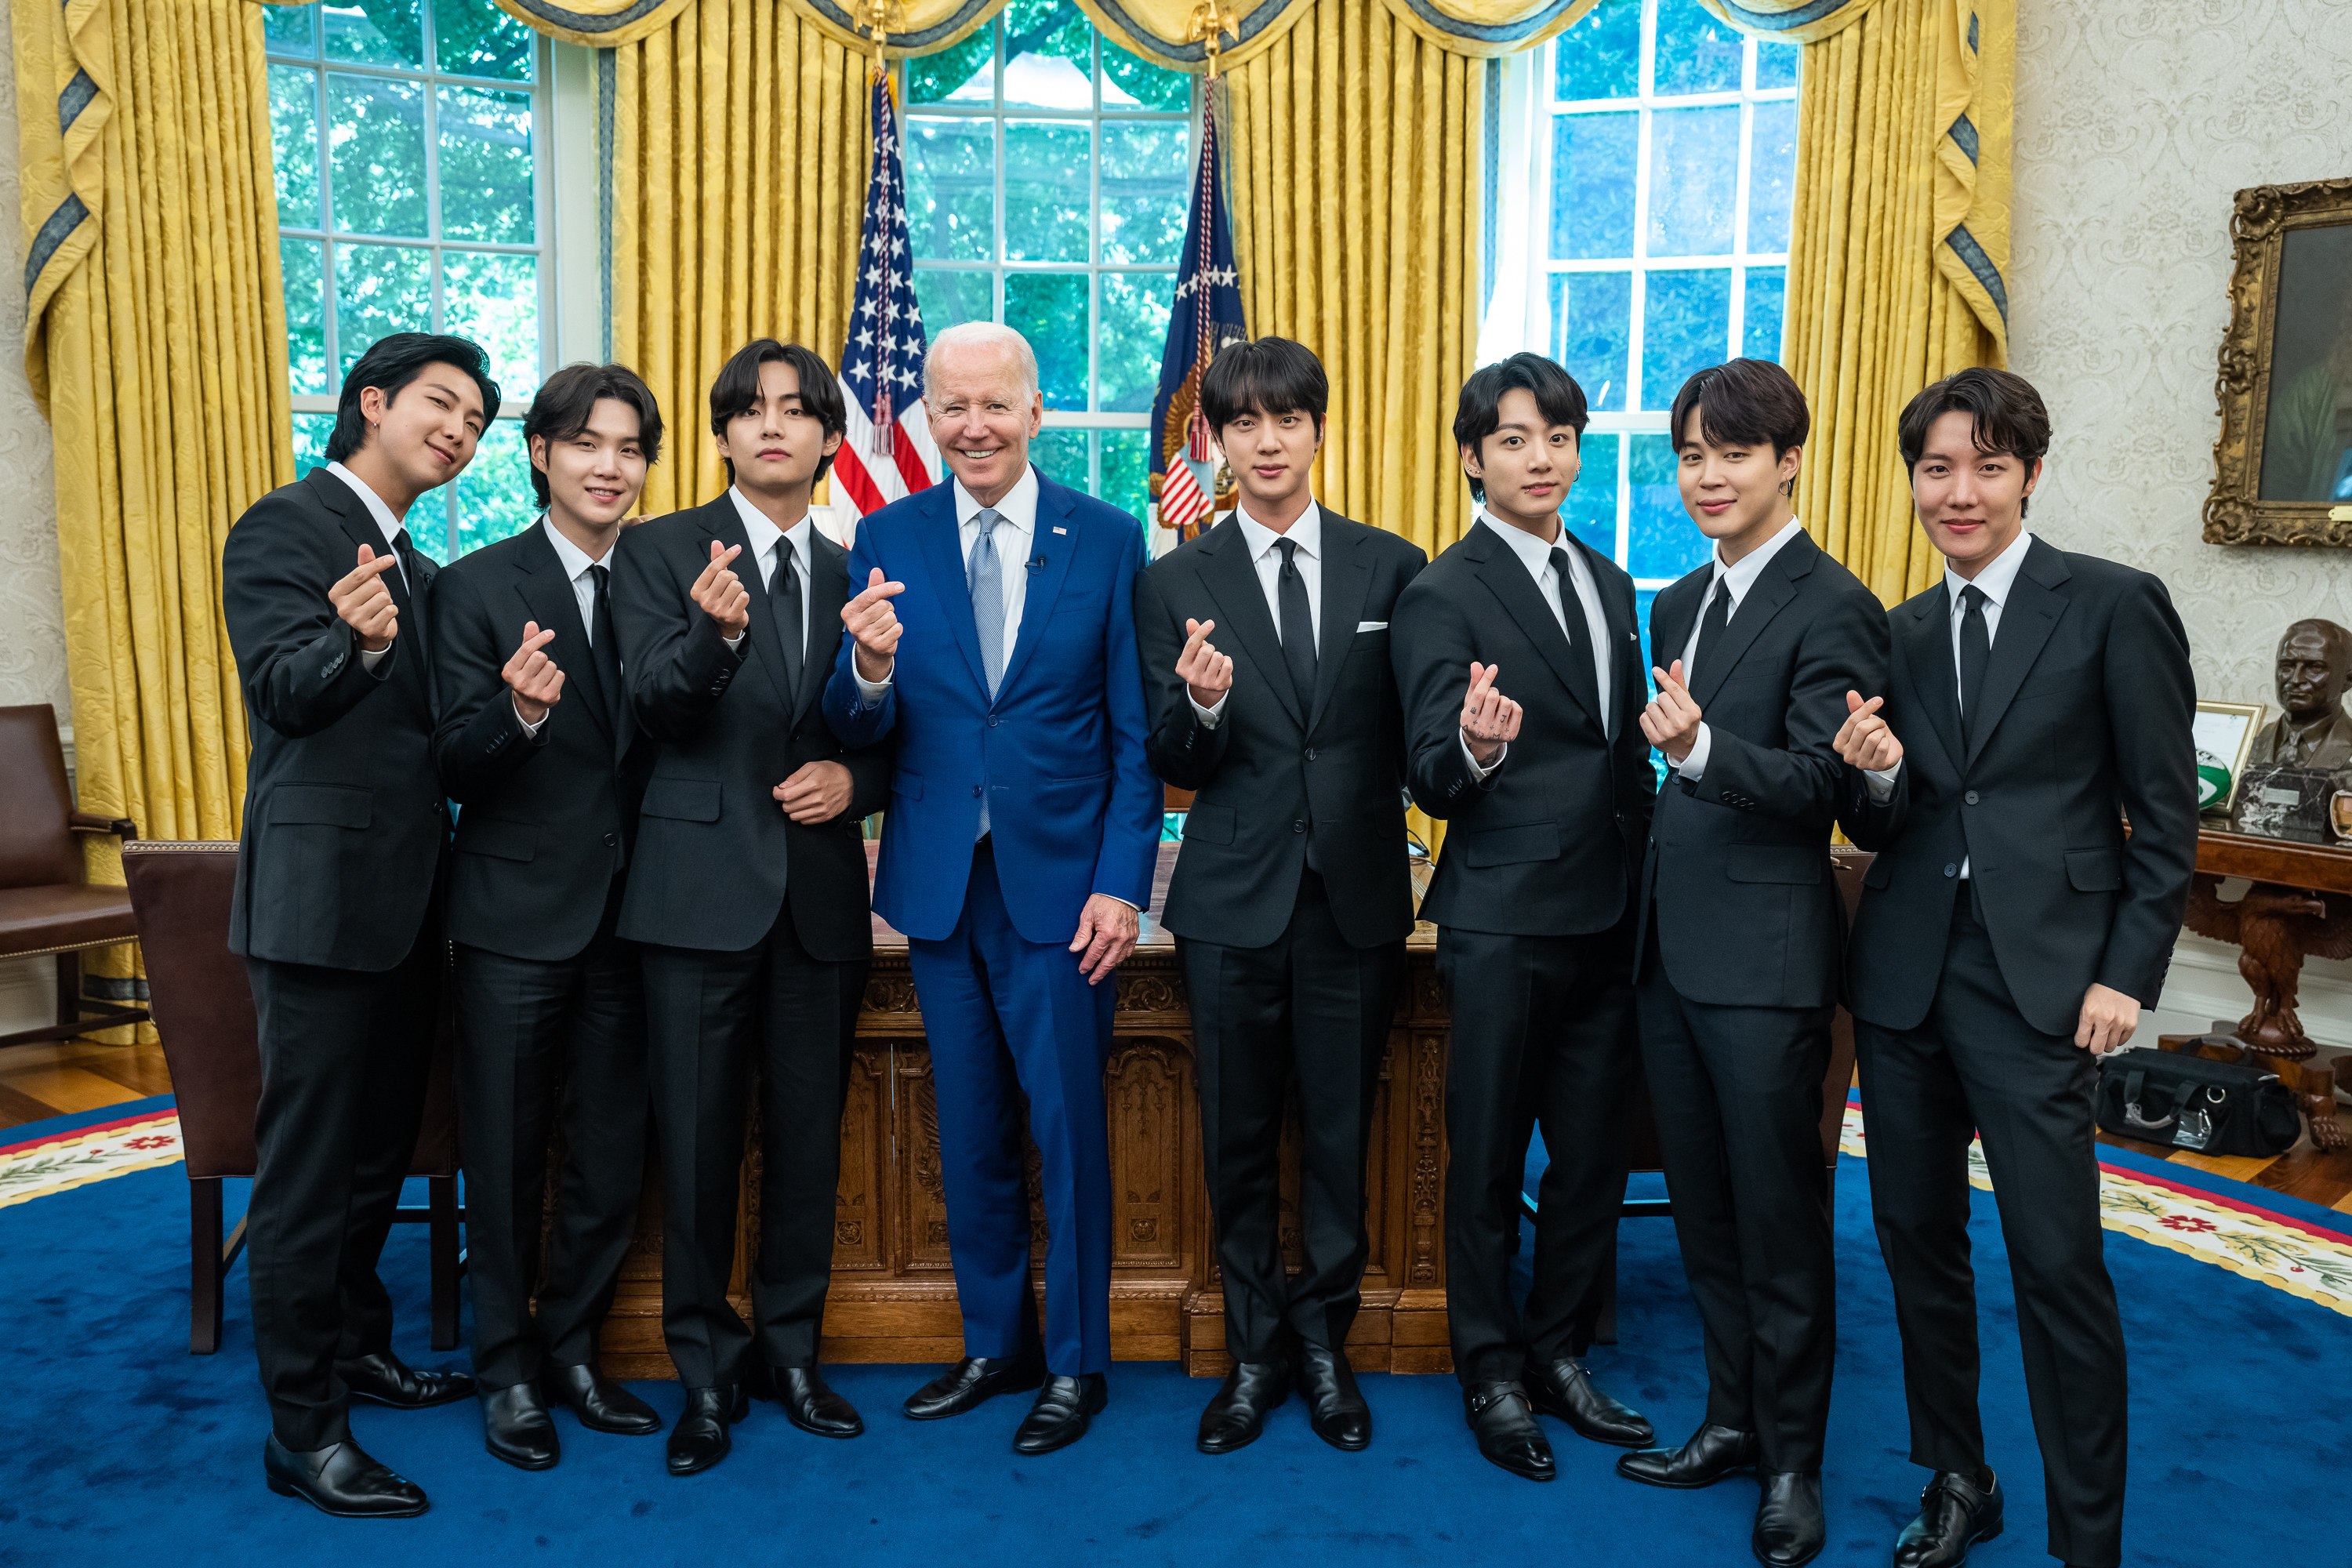 RM, Suga, V, Jin, Jungkook, Jimin, and J-Hope of BTS with President Joe Biden